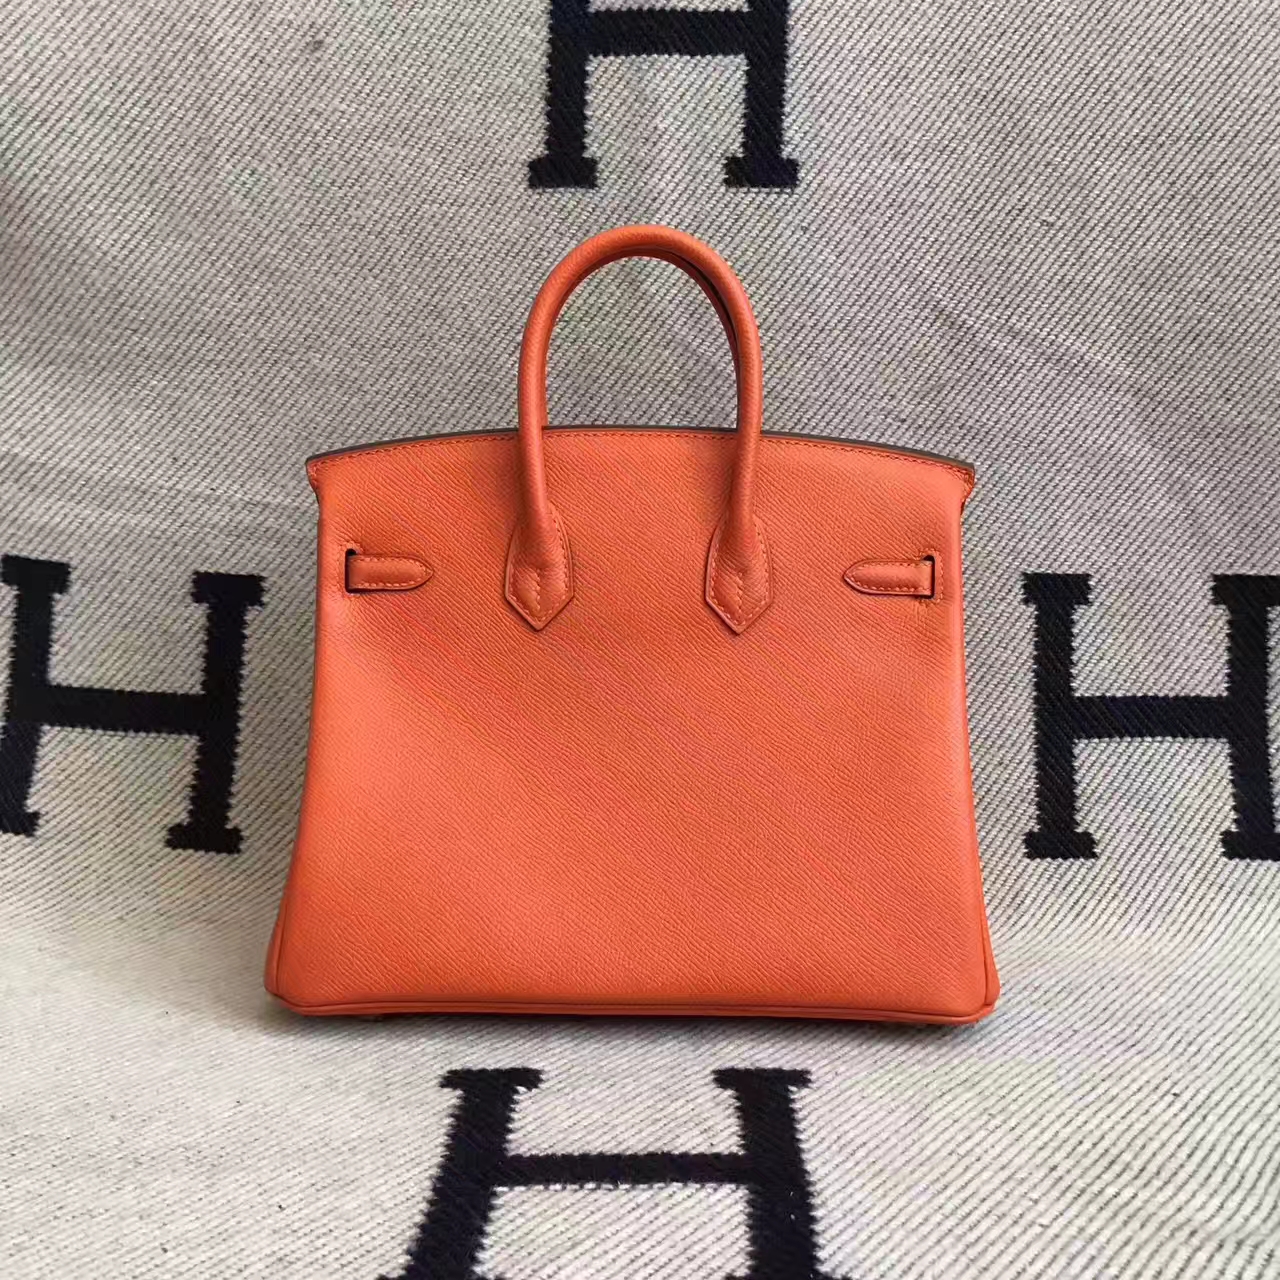 Cheap Hermes Epsom Calfskin Leather Birkin Bag 25cm in 93 Orange